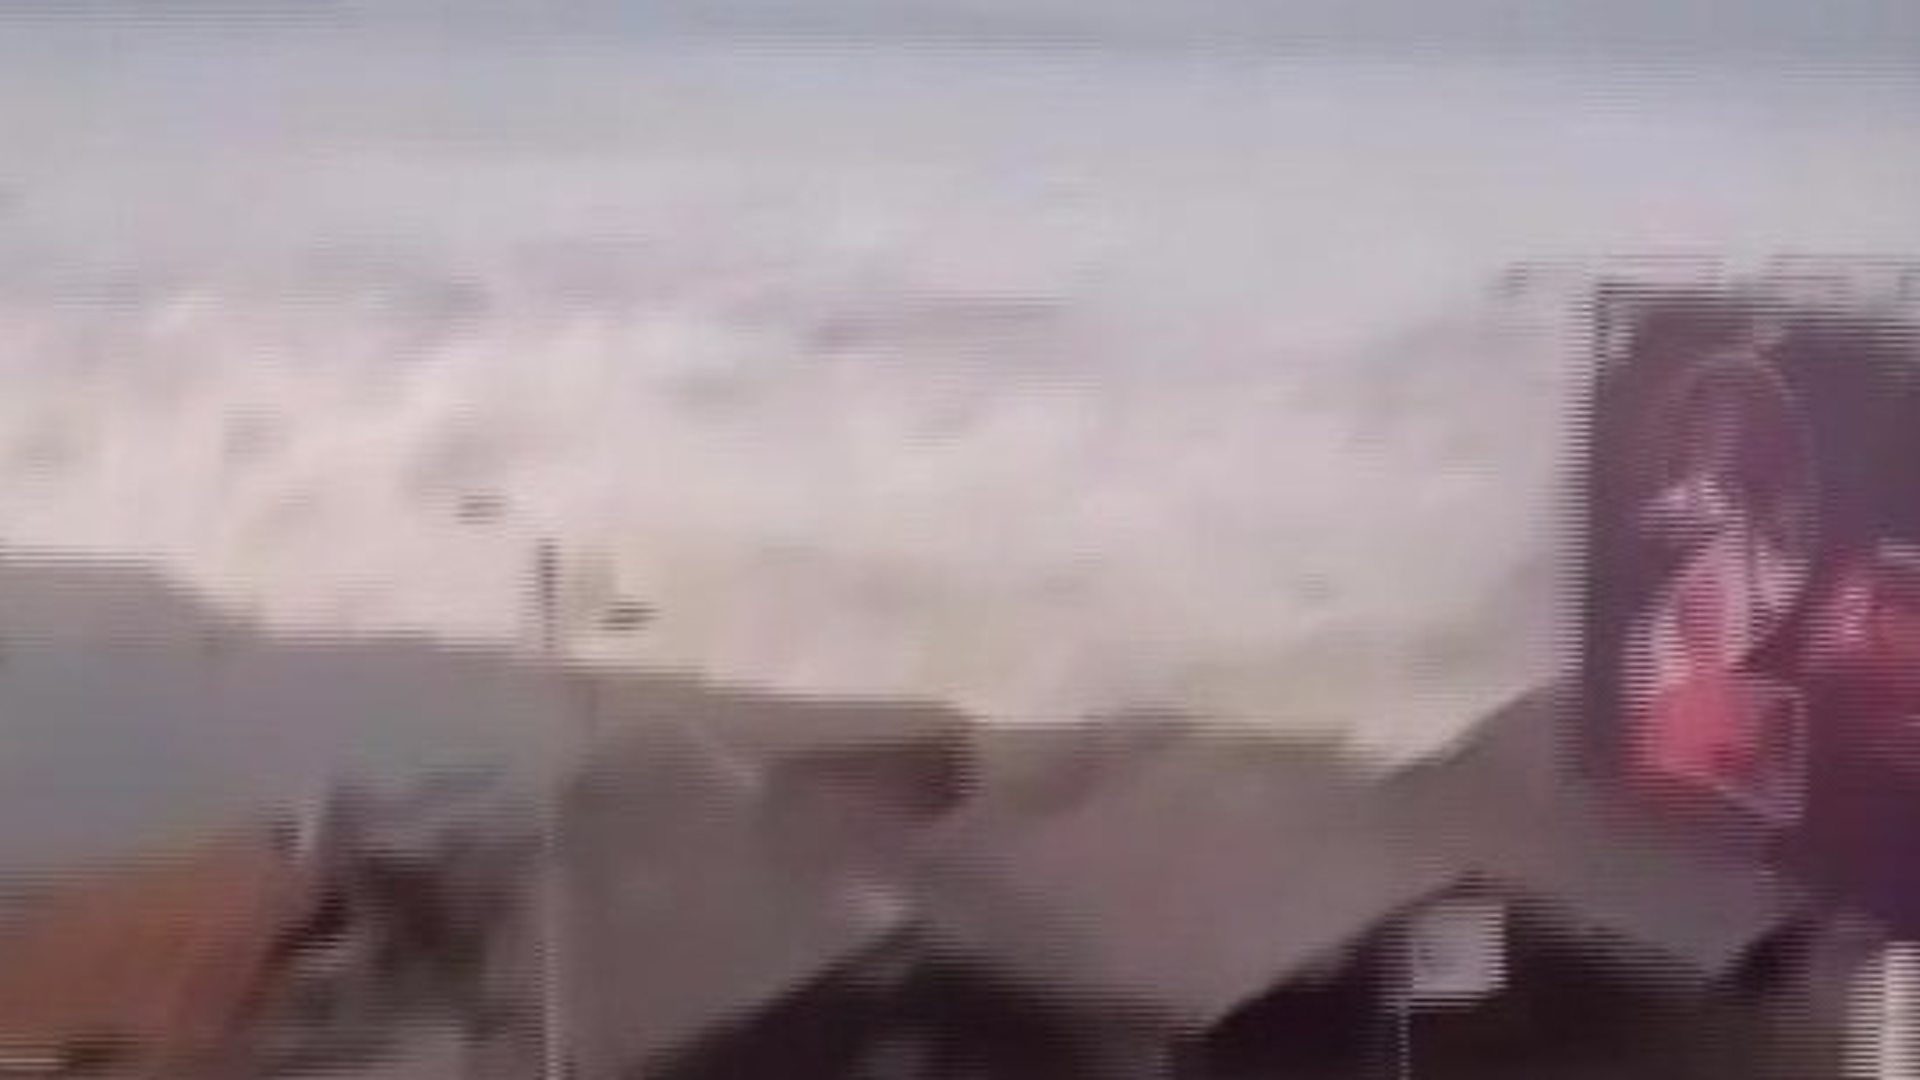 Video shows tsunami hitting city